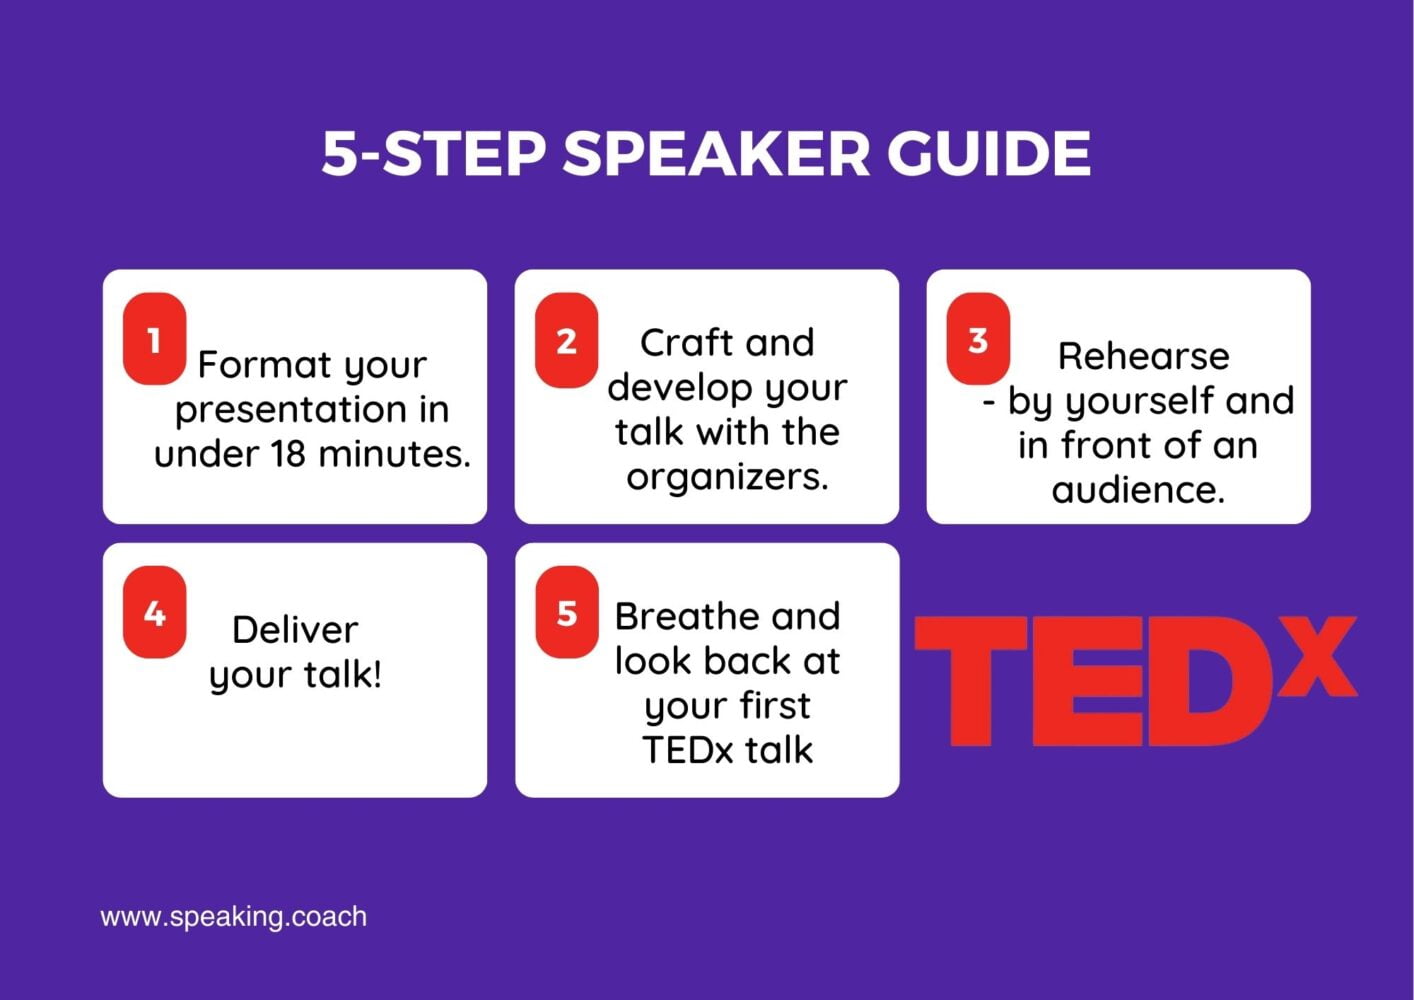 5-Step Speaker Guide of TEDx talk